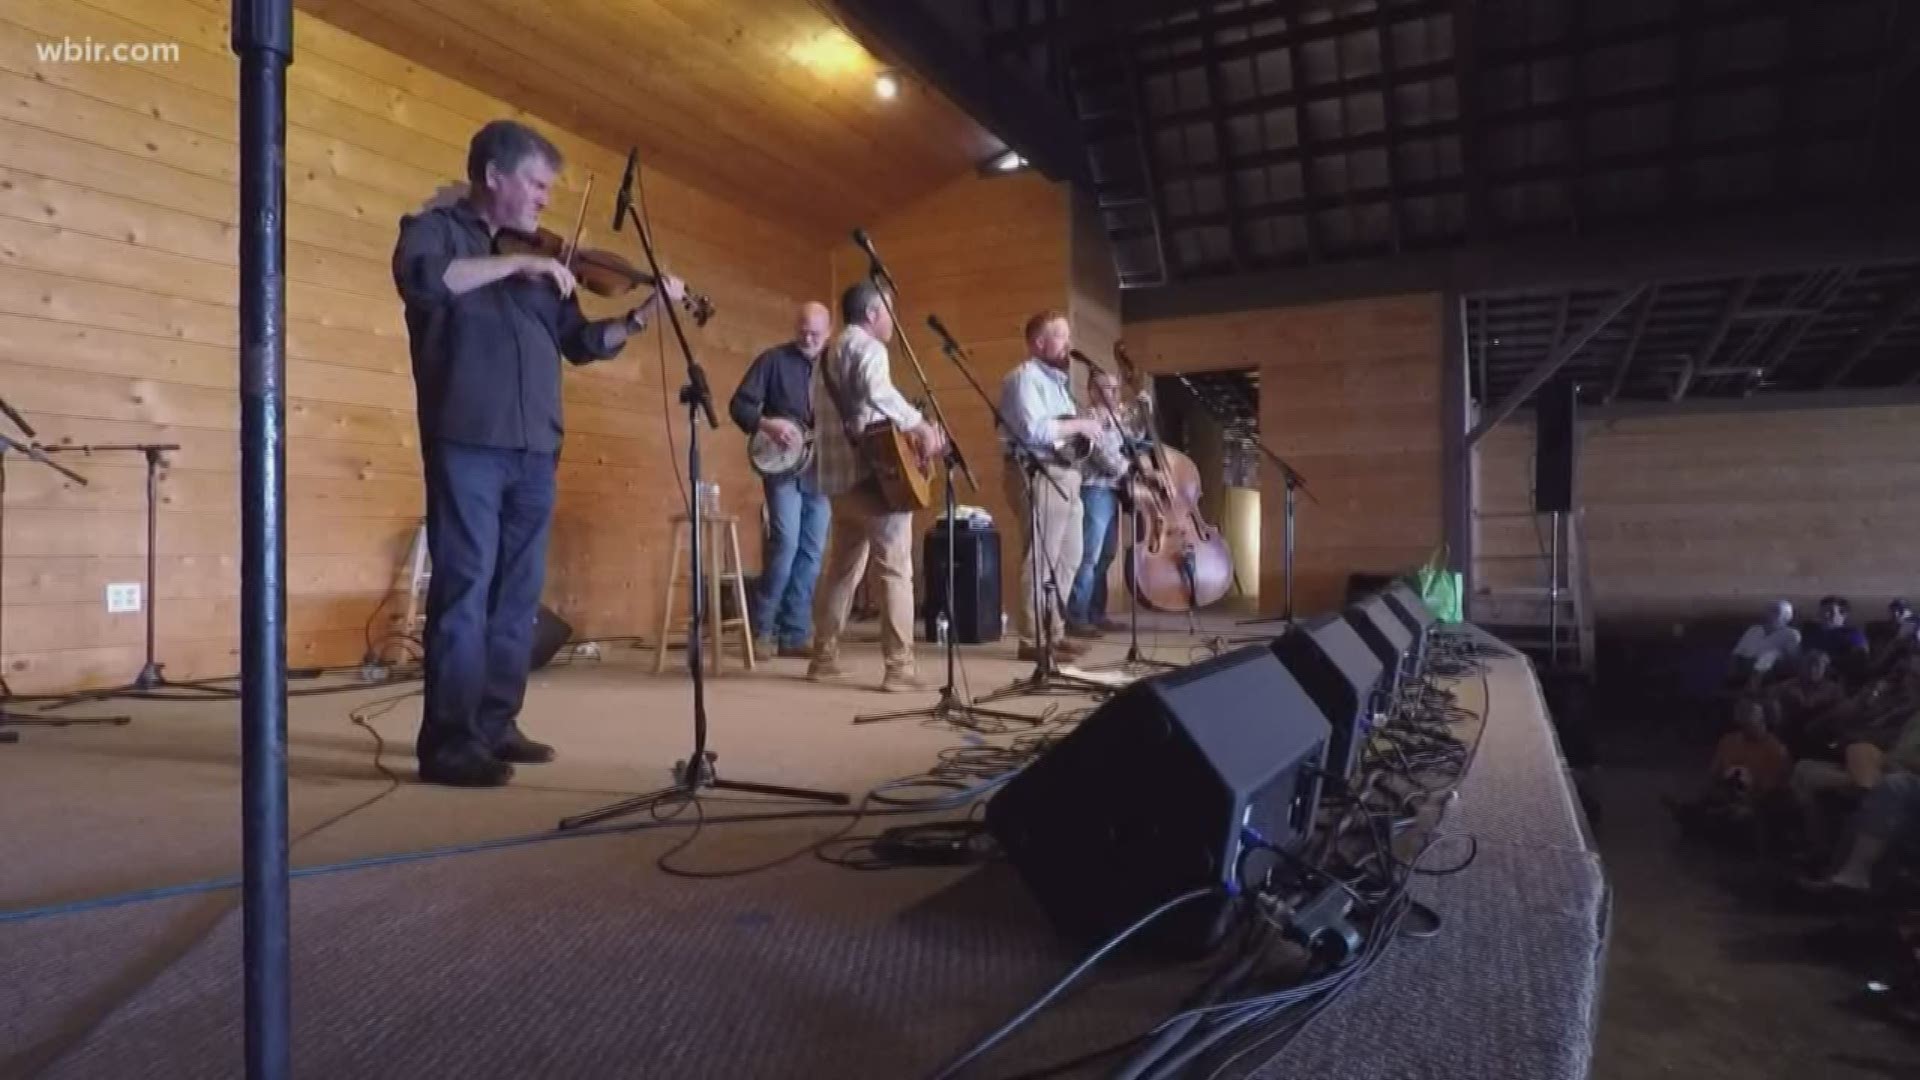 It was the event's 20th year bringing world-class, original live bluegrass to Kodak.